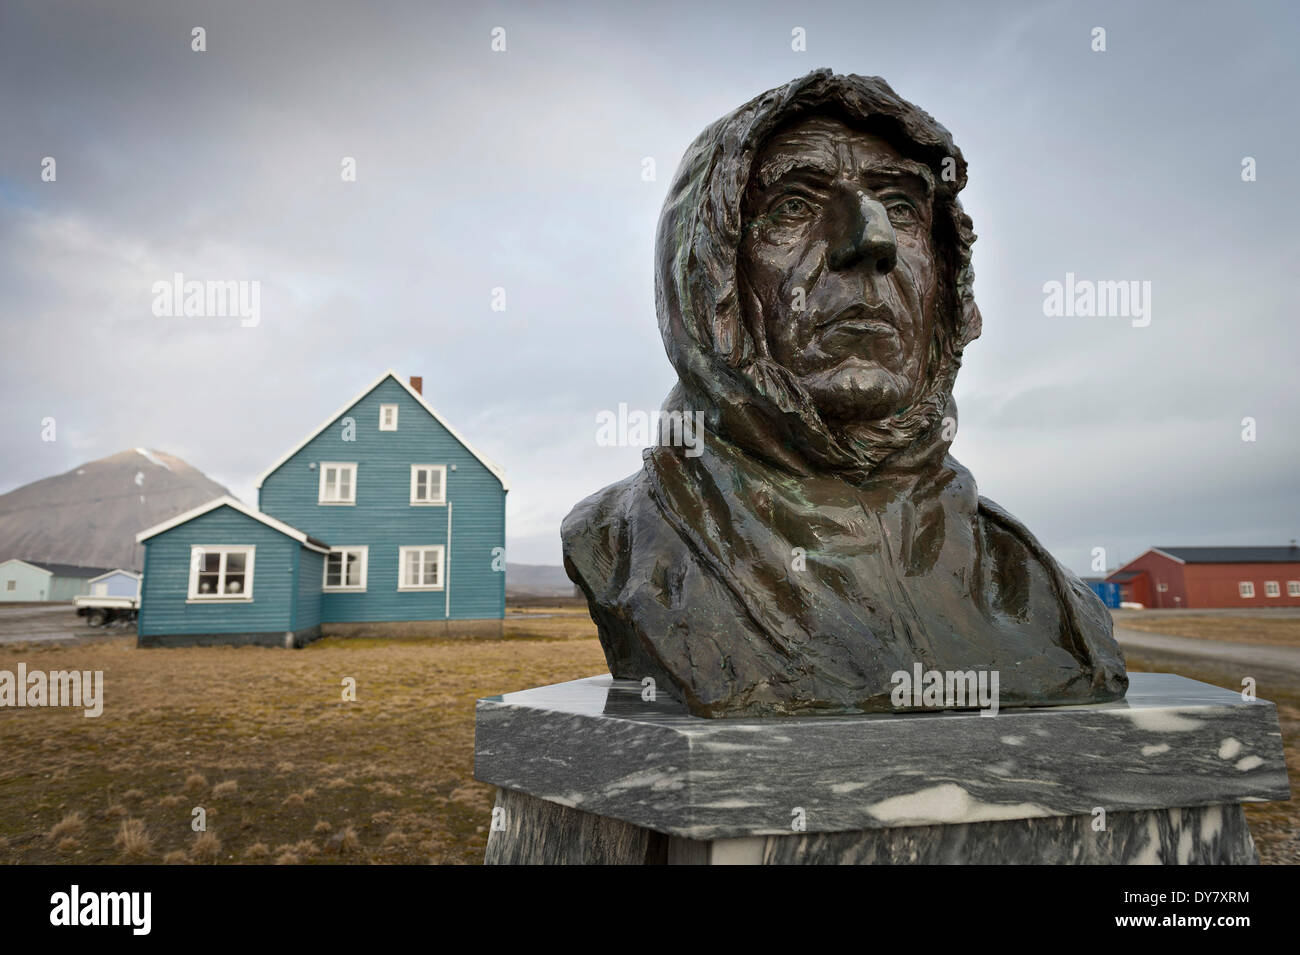 Busto di polare norvegese explorer Roald Amundsen, Ny-Alesund, Spitsbergen, isole Svalbard Isole Svalbard e Jan Mayen, Norvegia Foto Stock